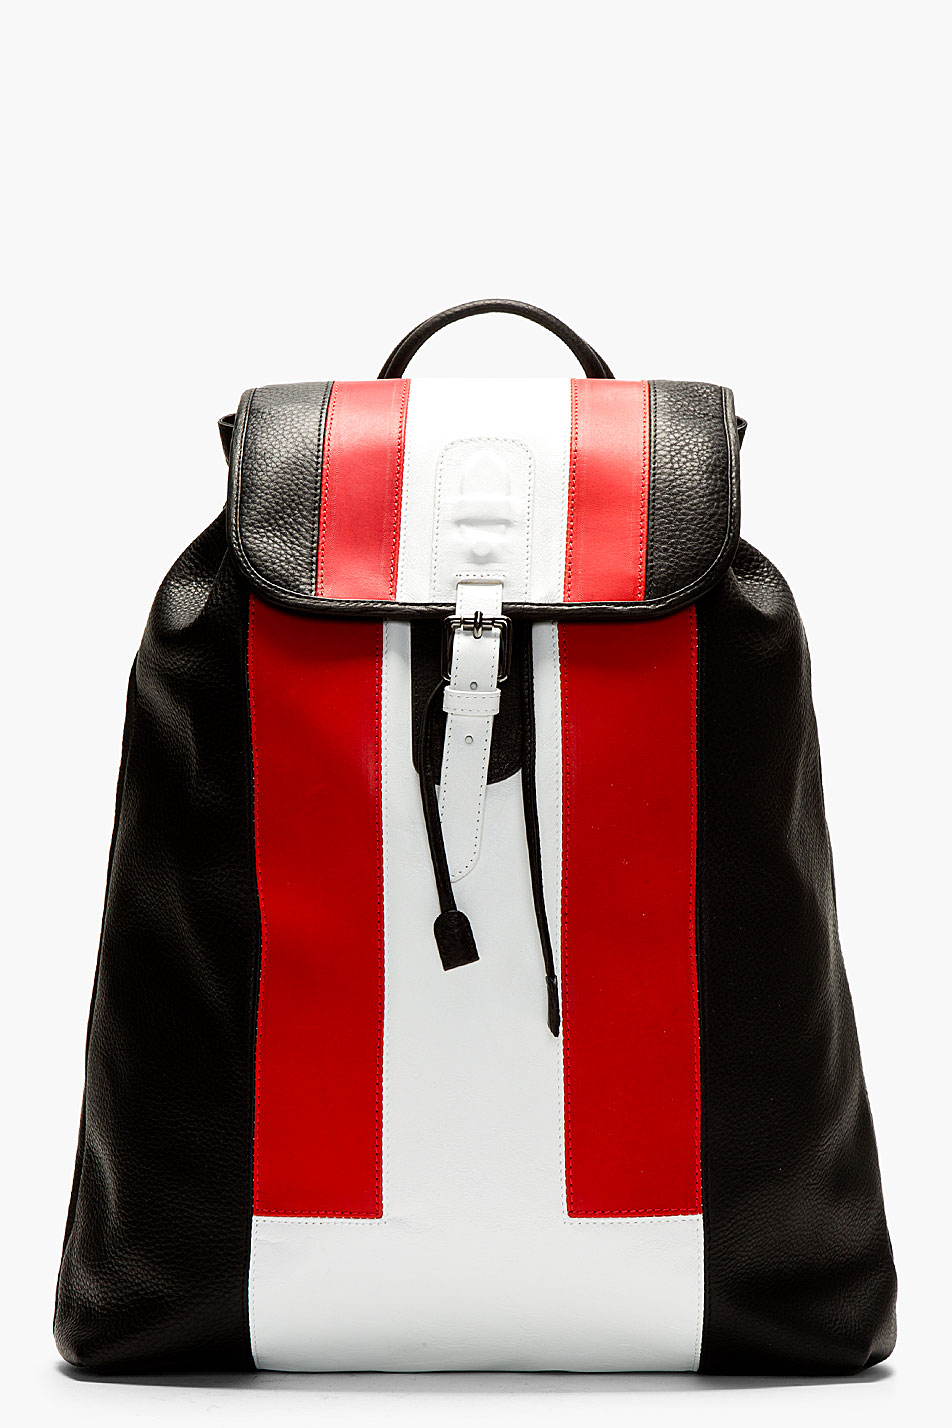 Neil Barrett Black Leather Colorblocked Backpack in Red for Men (black) | Lyst